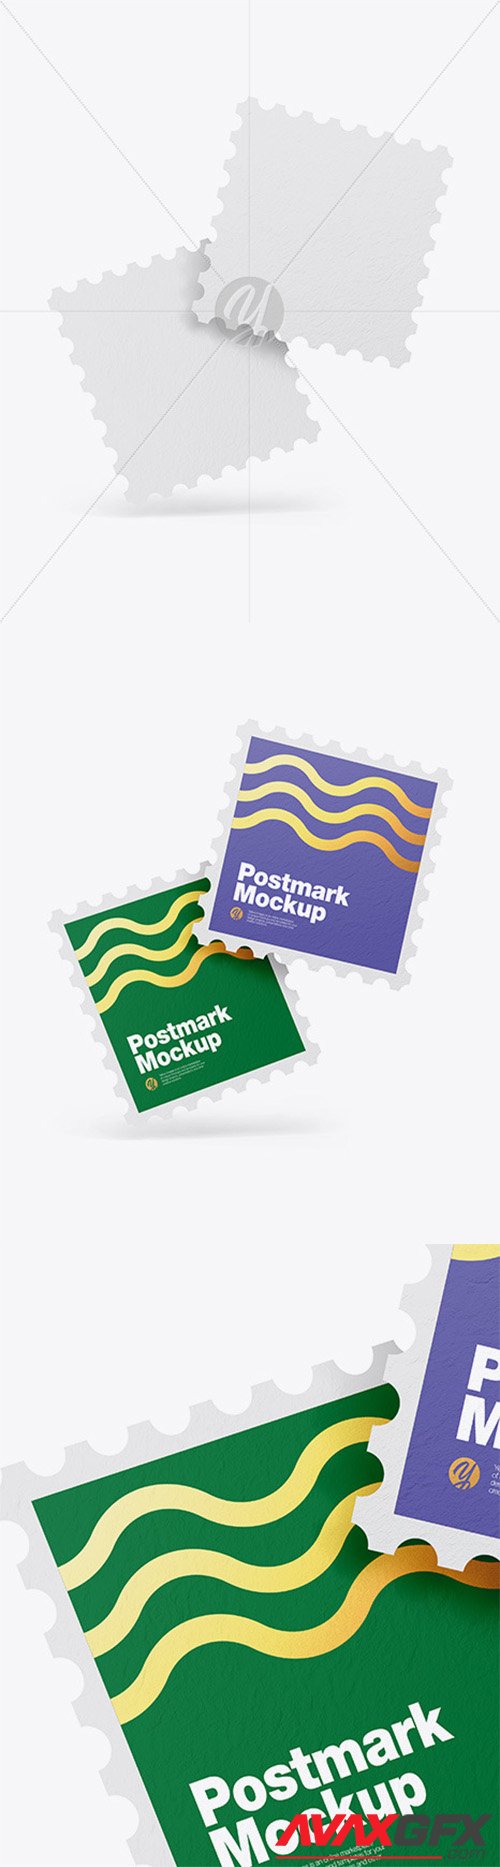 Textured Square Postmarks Mockup 57653